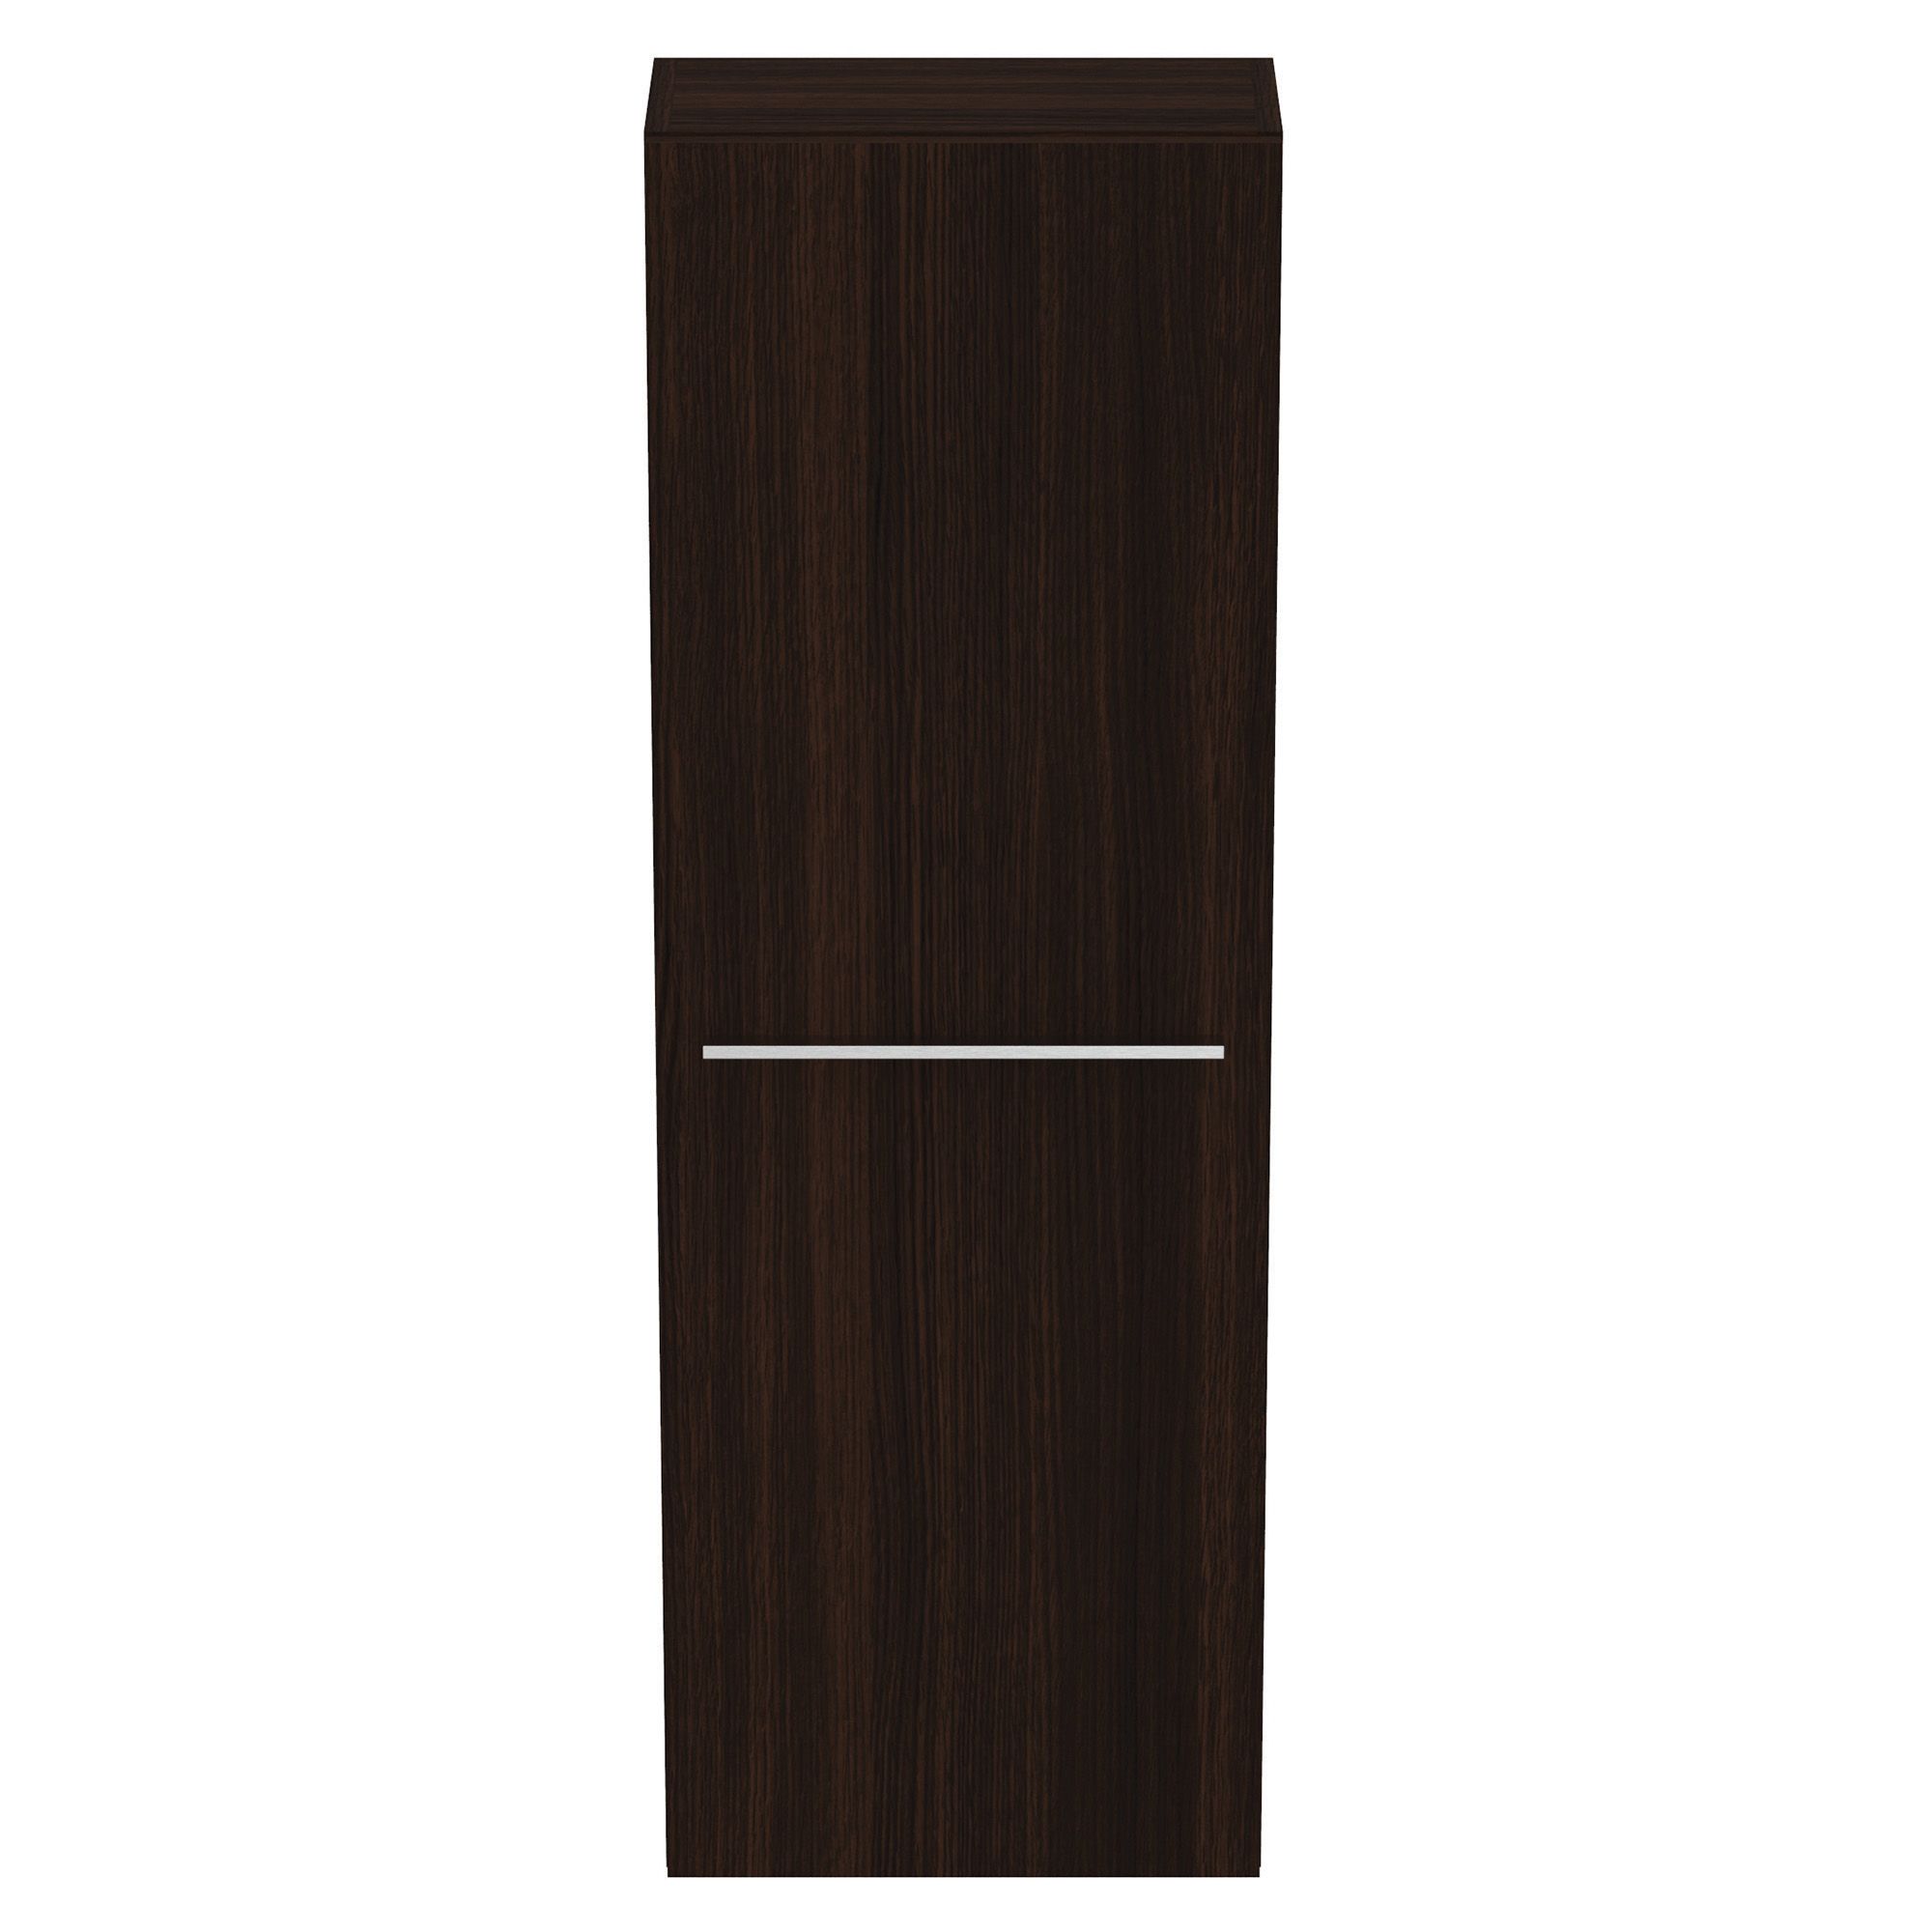 Ideal Standard i.life S Tall Satin Coffee brown Oak effect Single Wall-mounted Bathroom Cabinet (H)120cm (W)40cm